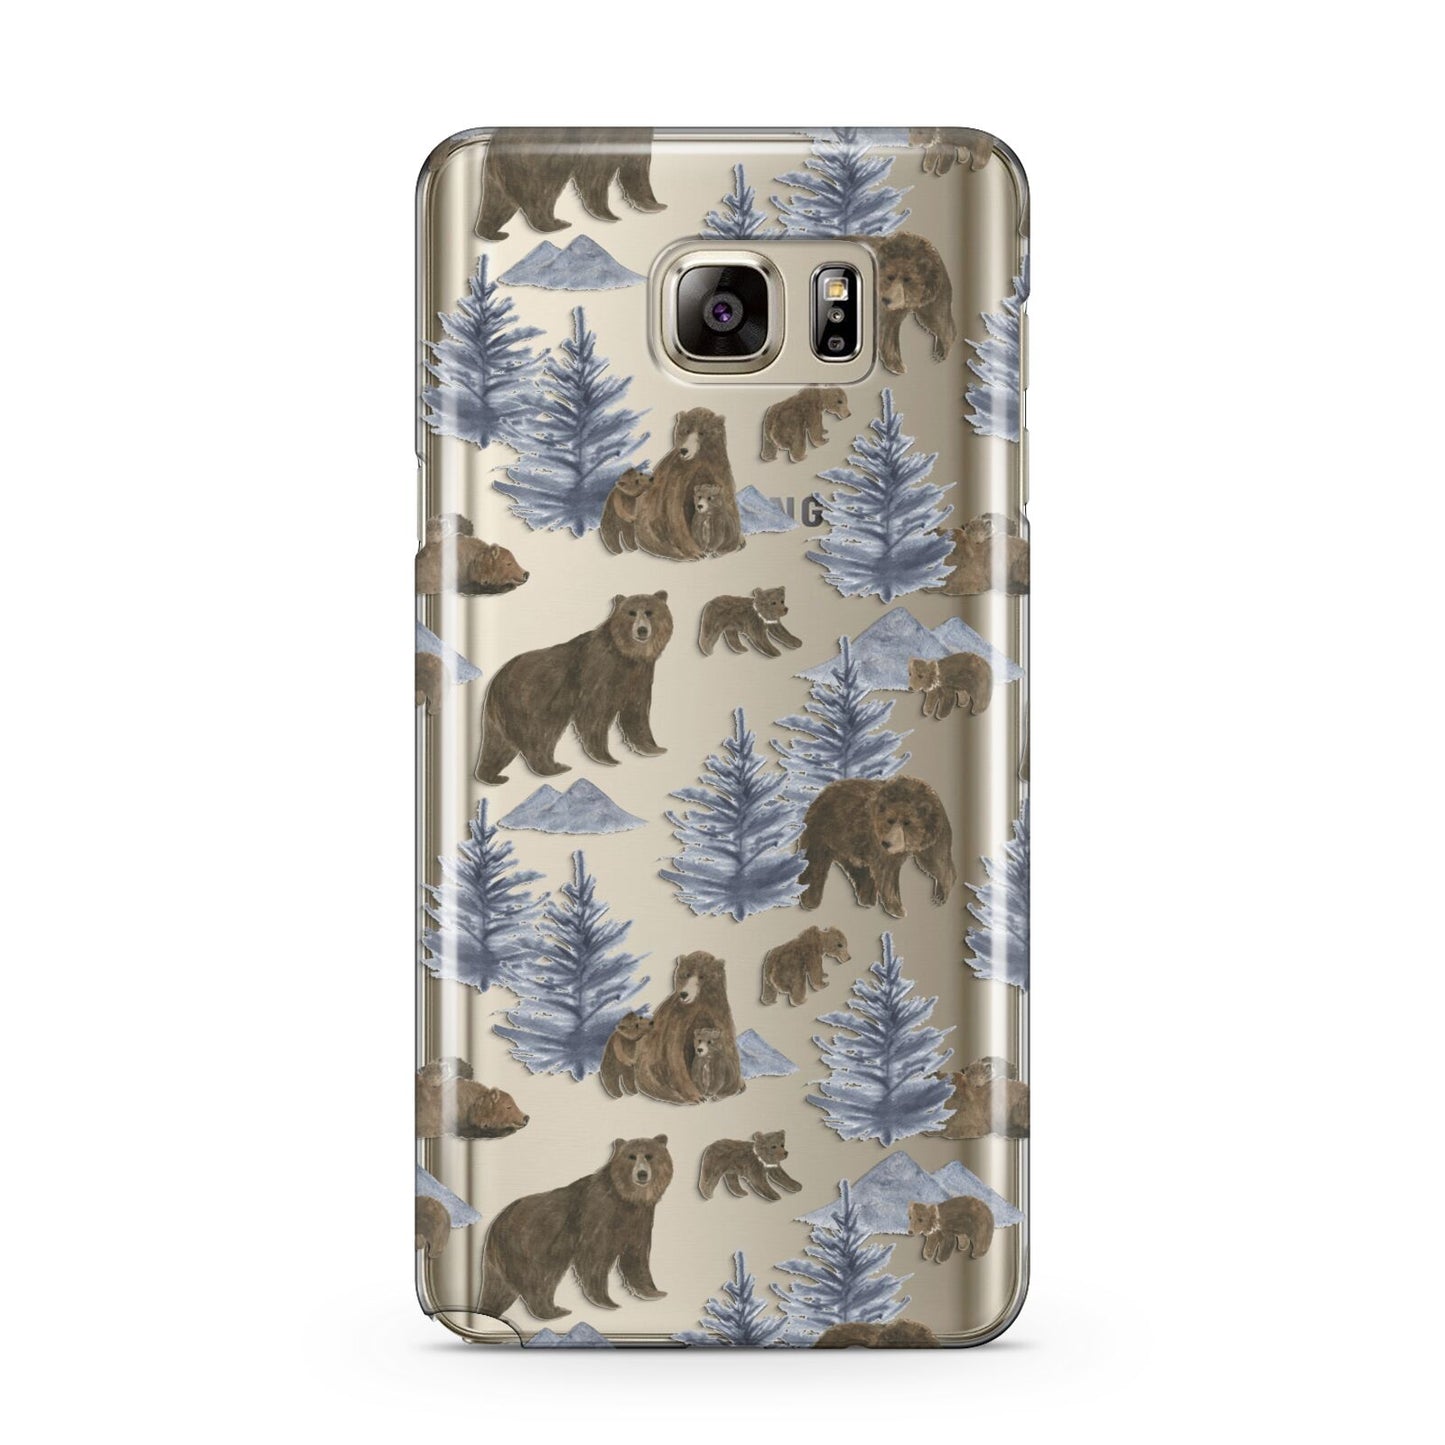 Brown Bear Samsung Galaxy Note 5 Case